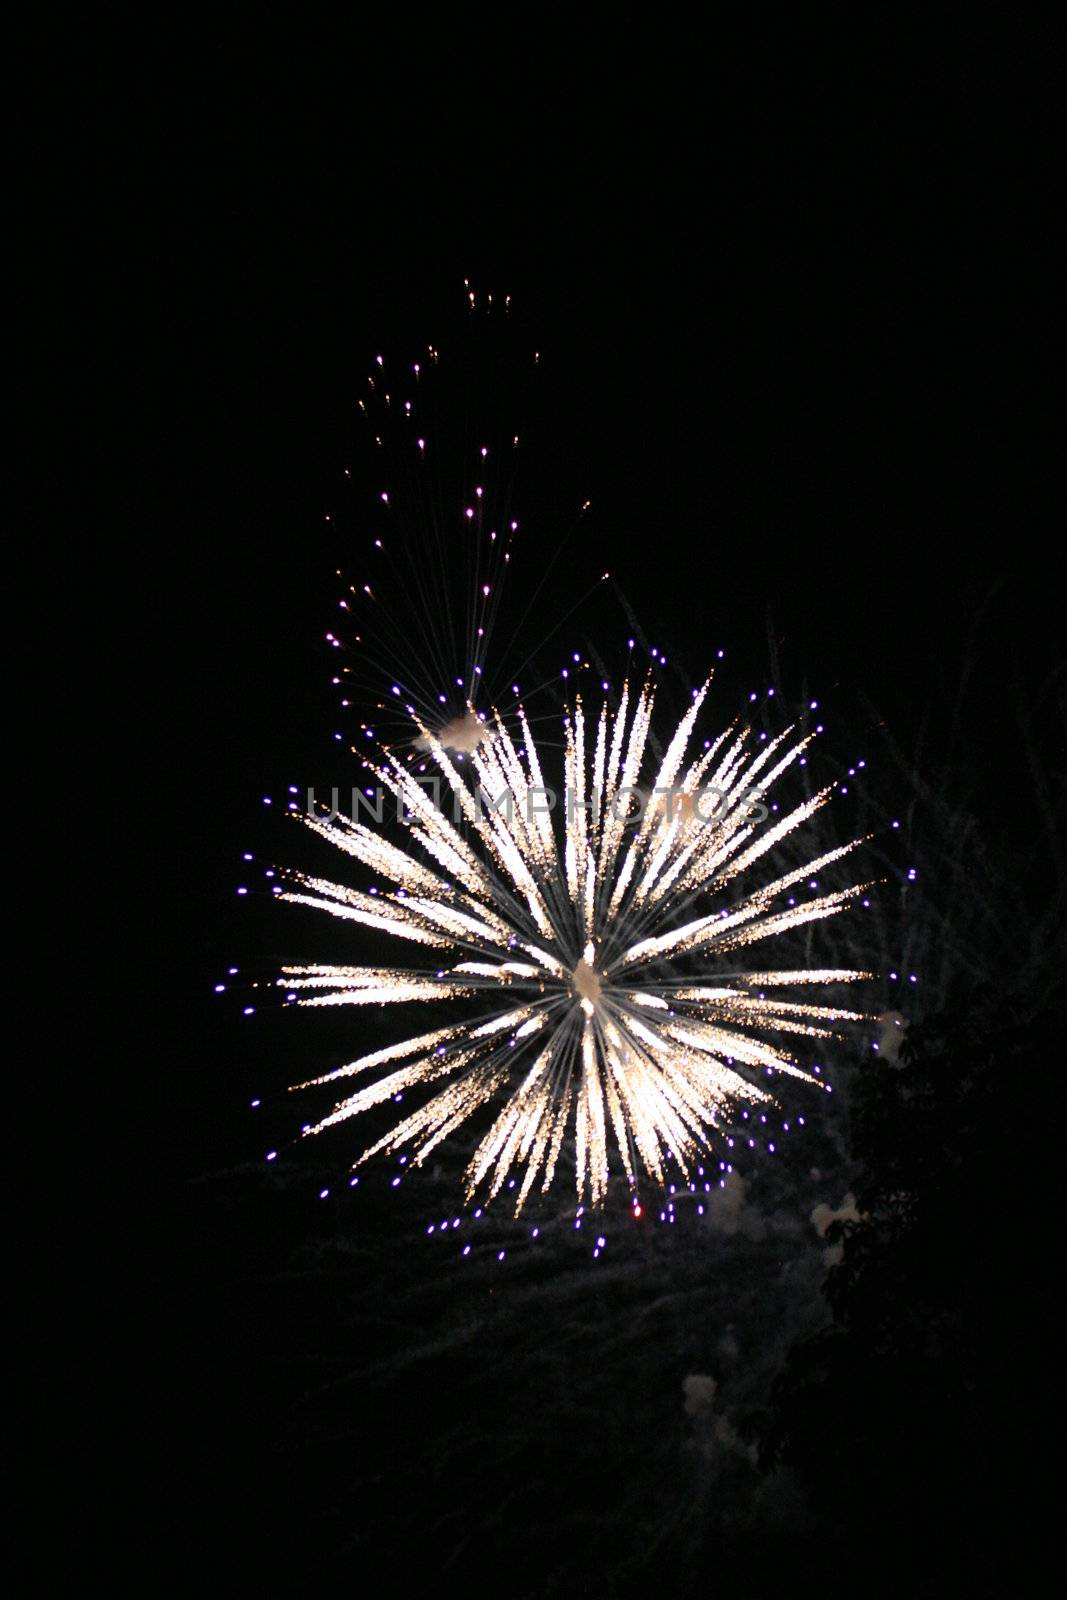 Fireworks display on a dark night by haiderazim